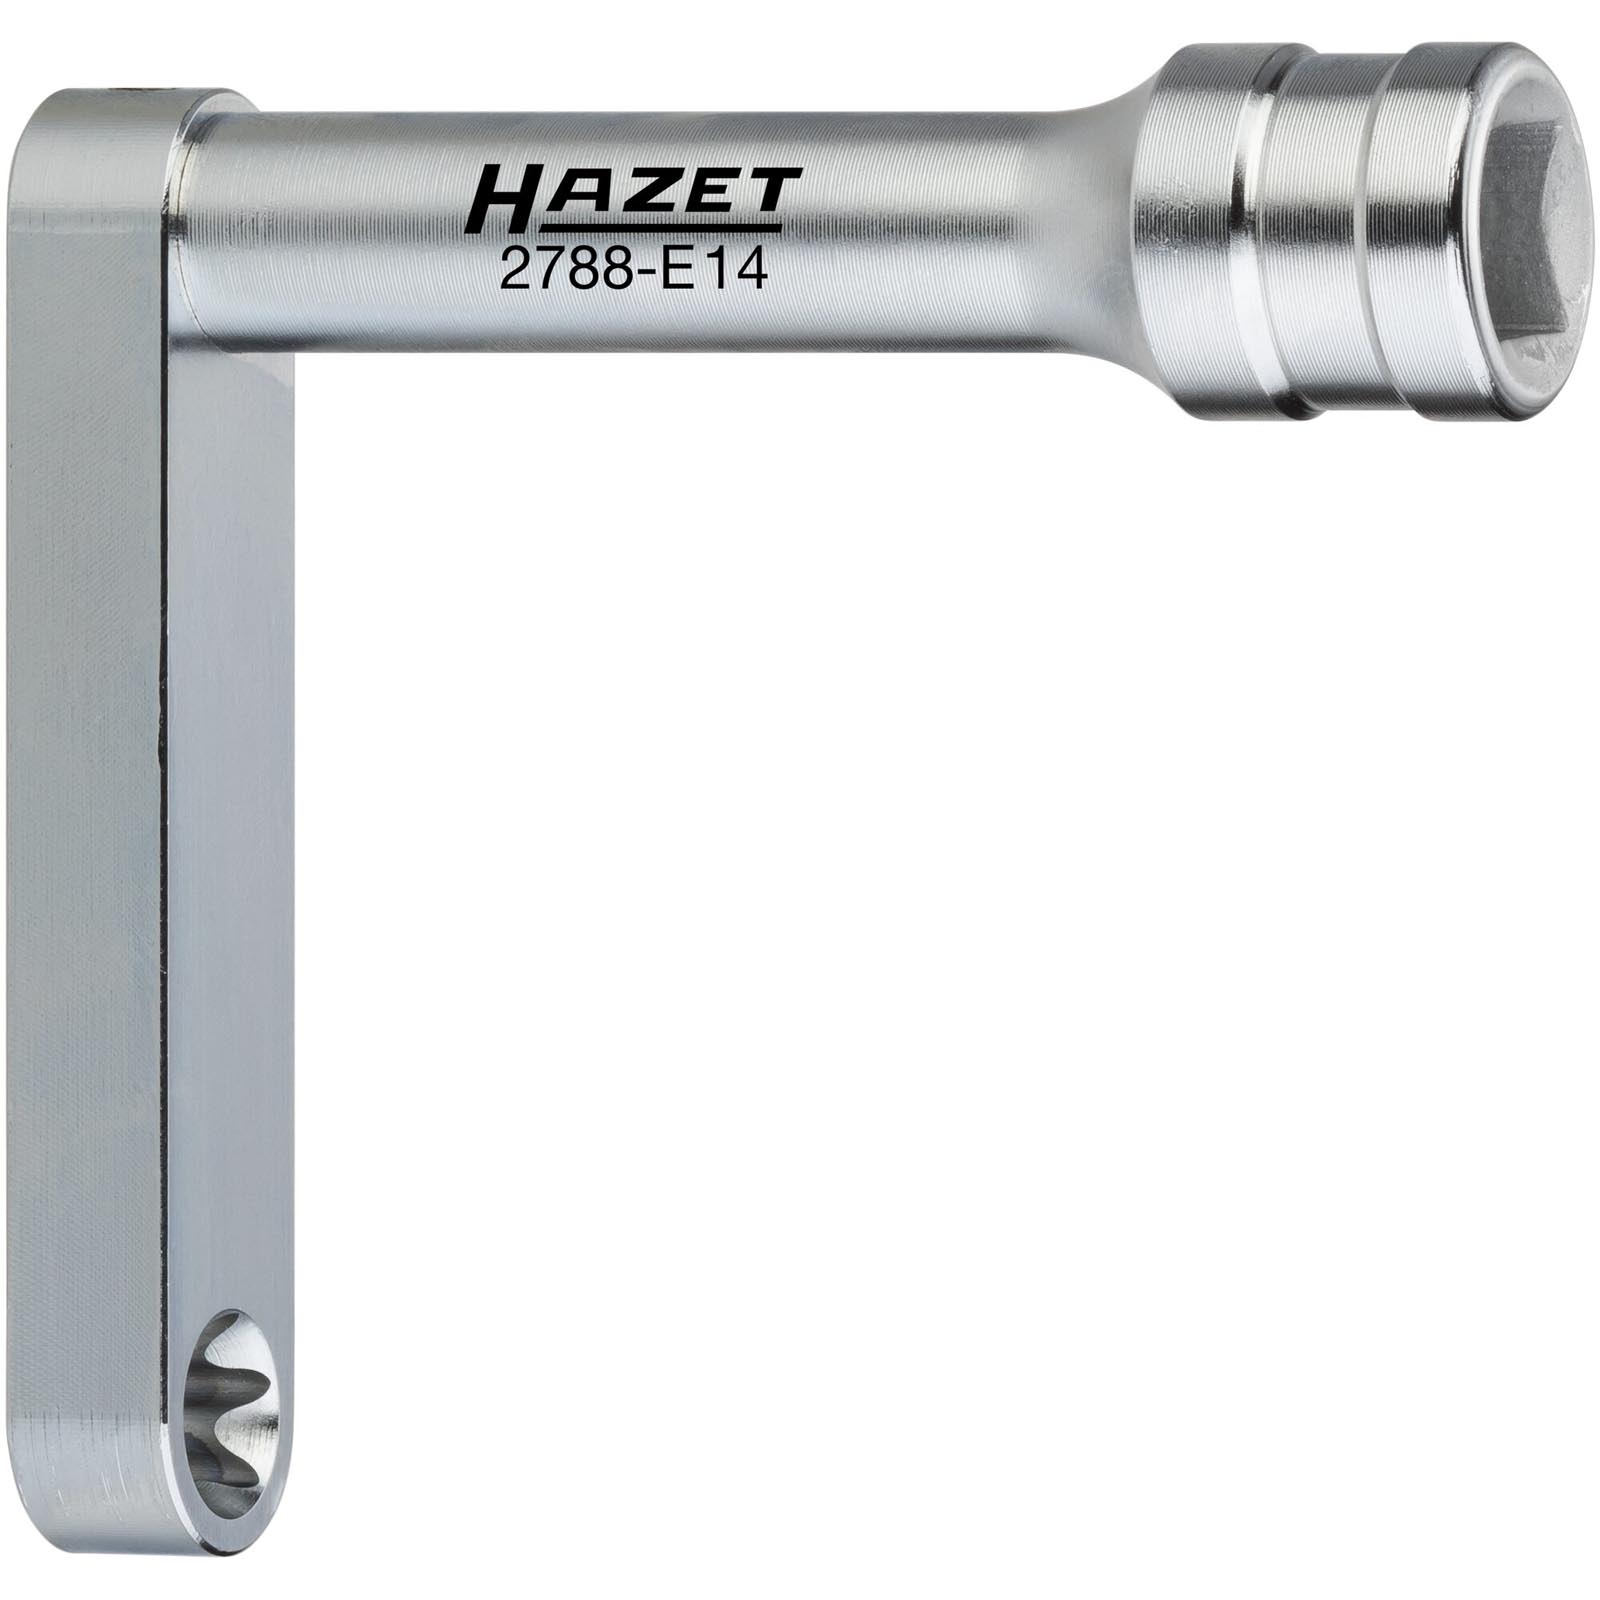 HAZET Cam Gear Installation Tool